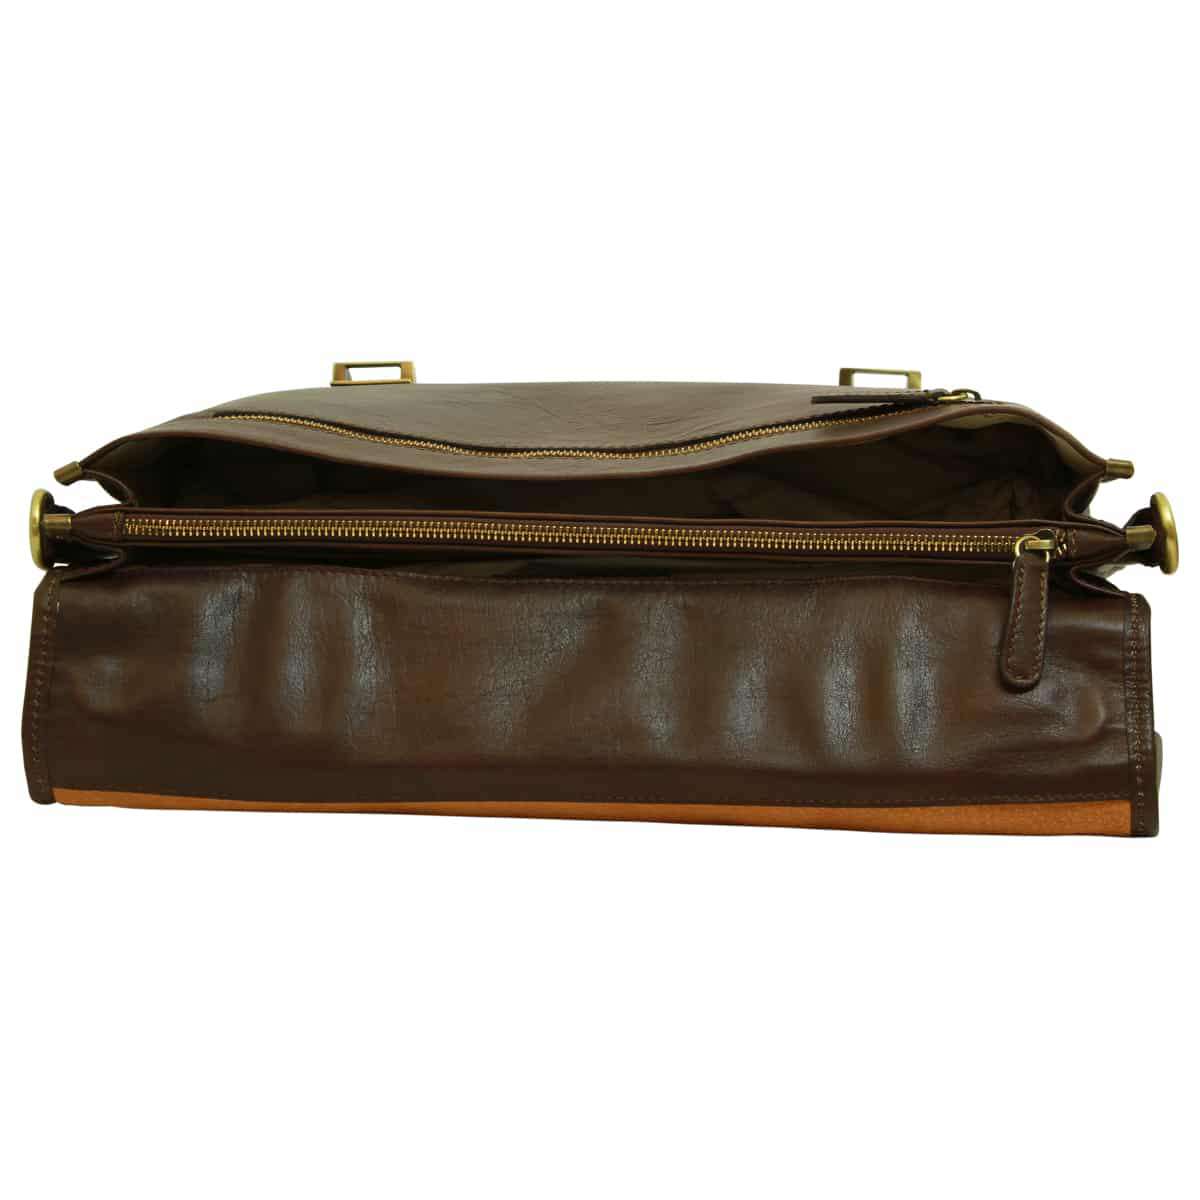 Soft Calfskin Leather Briefcase with shoulder strap - Dark Brown | 030991TM | EURO | Old Angler Firenze